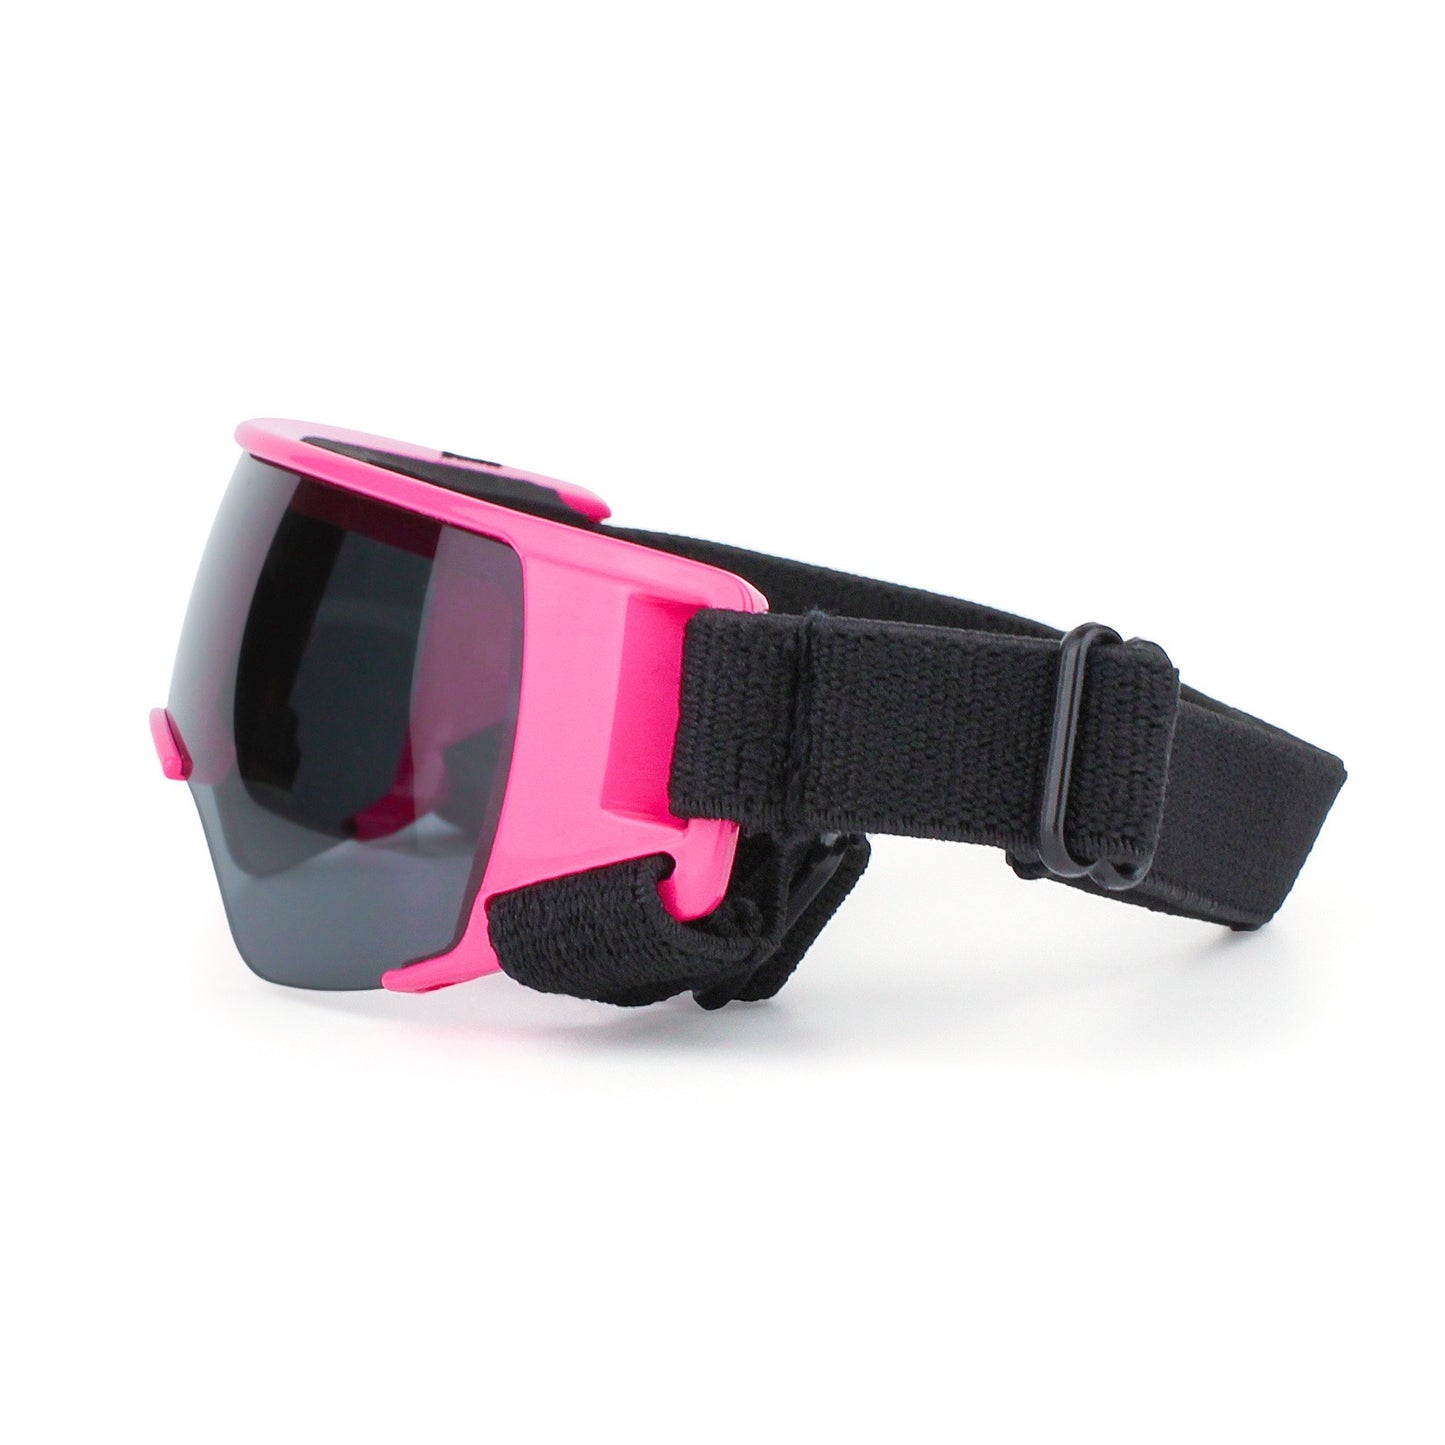 Dog Goggles Medium Small Dogs Sunglasses Used for Drive Ride ski Surf